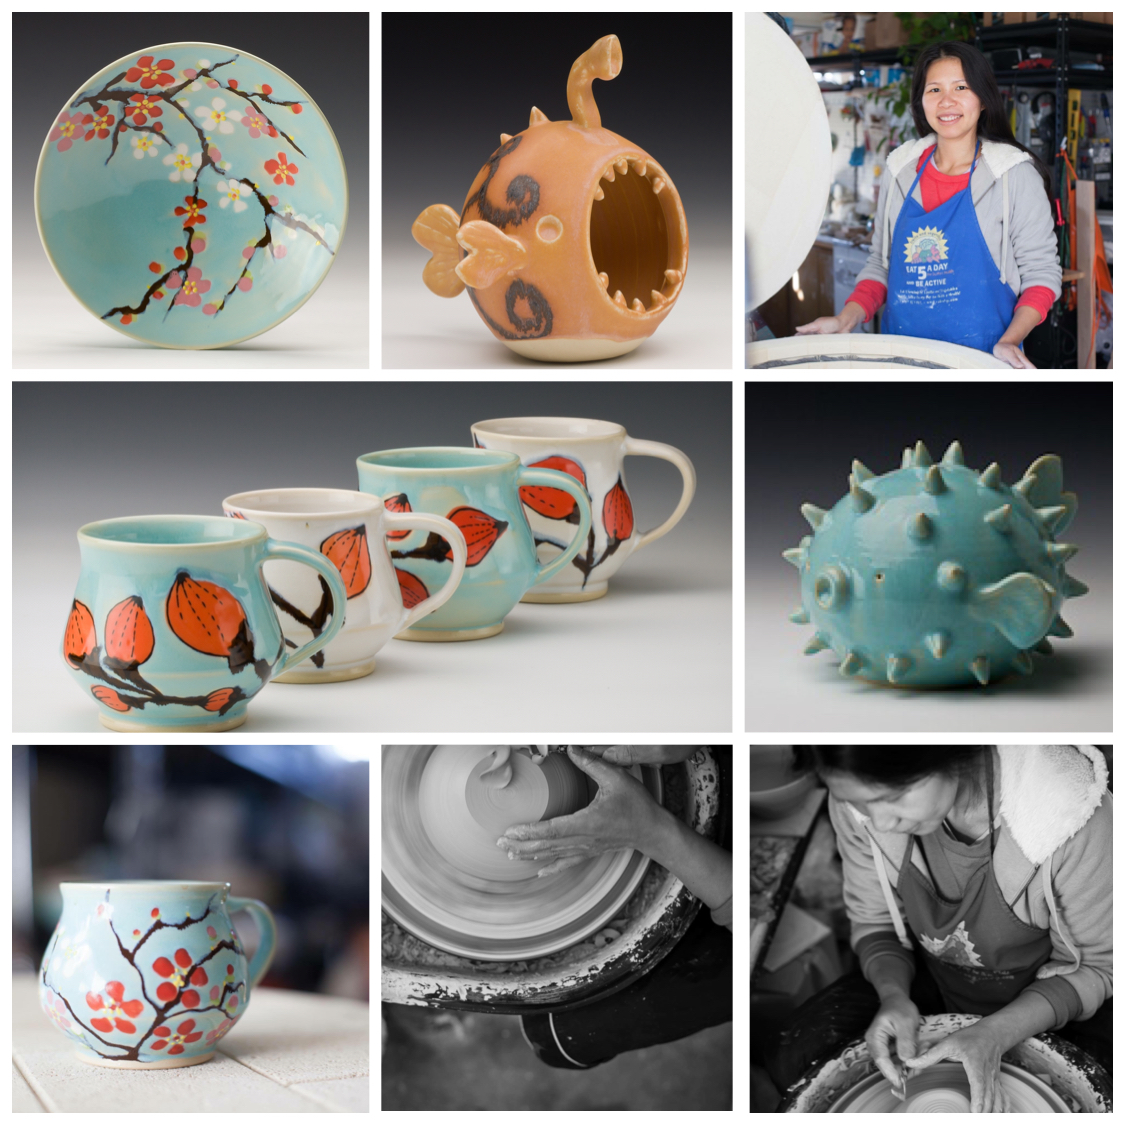 Brenda's Ceramics and Jewelry